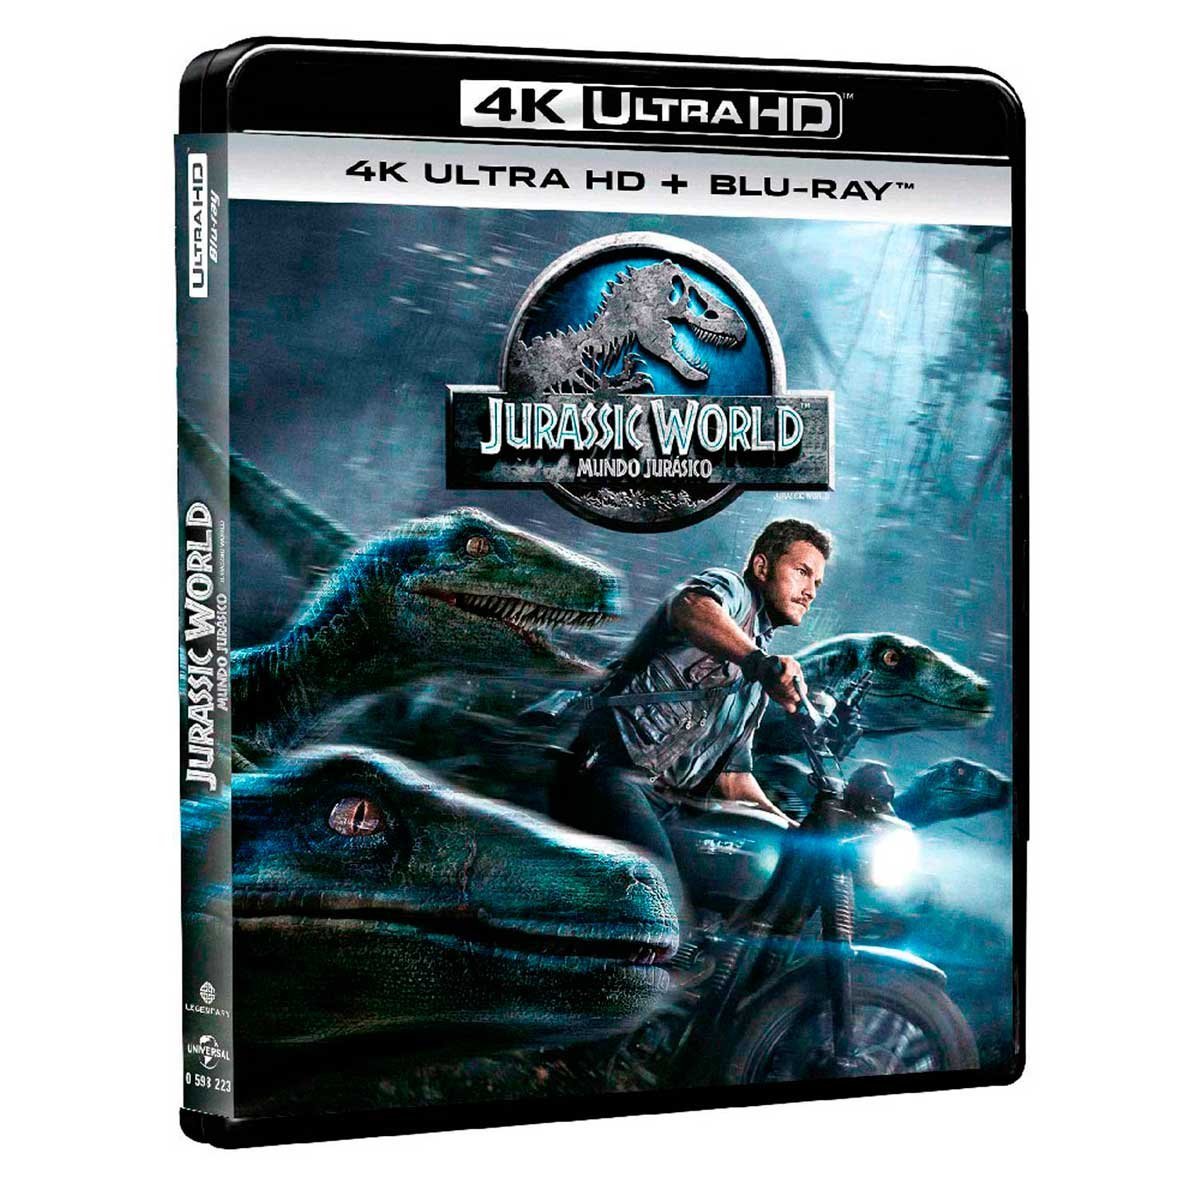 4K Ultra Hd + Blu Ray Jurassic World Mundo Jurasico